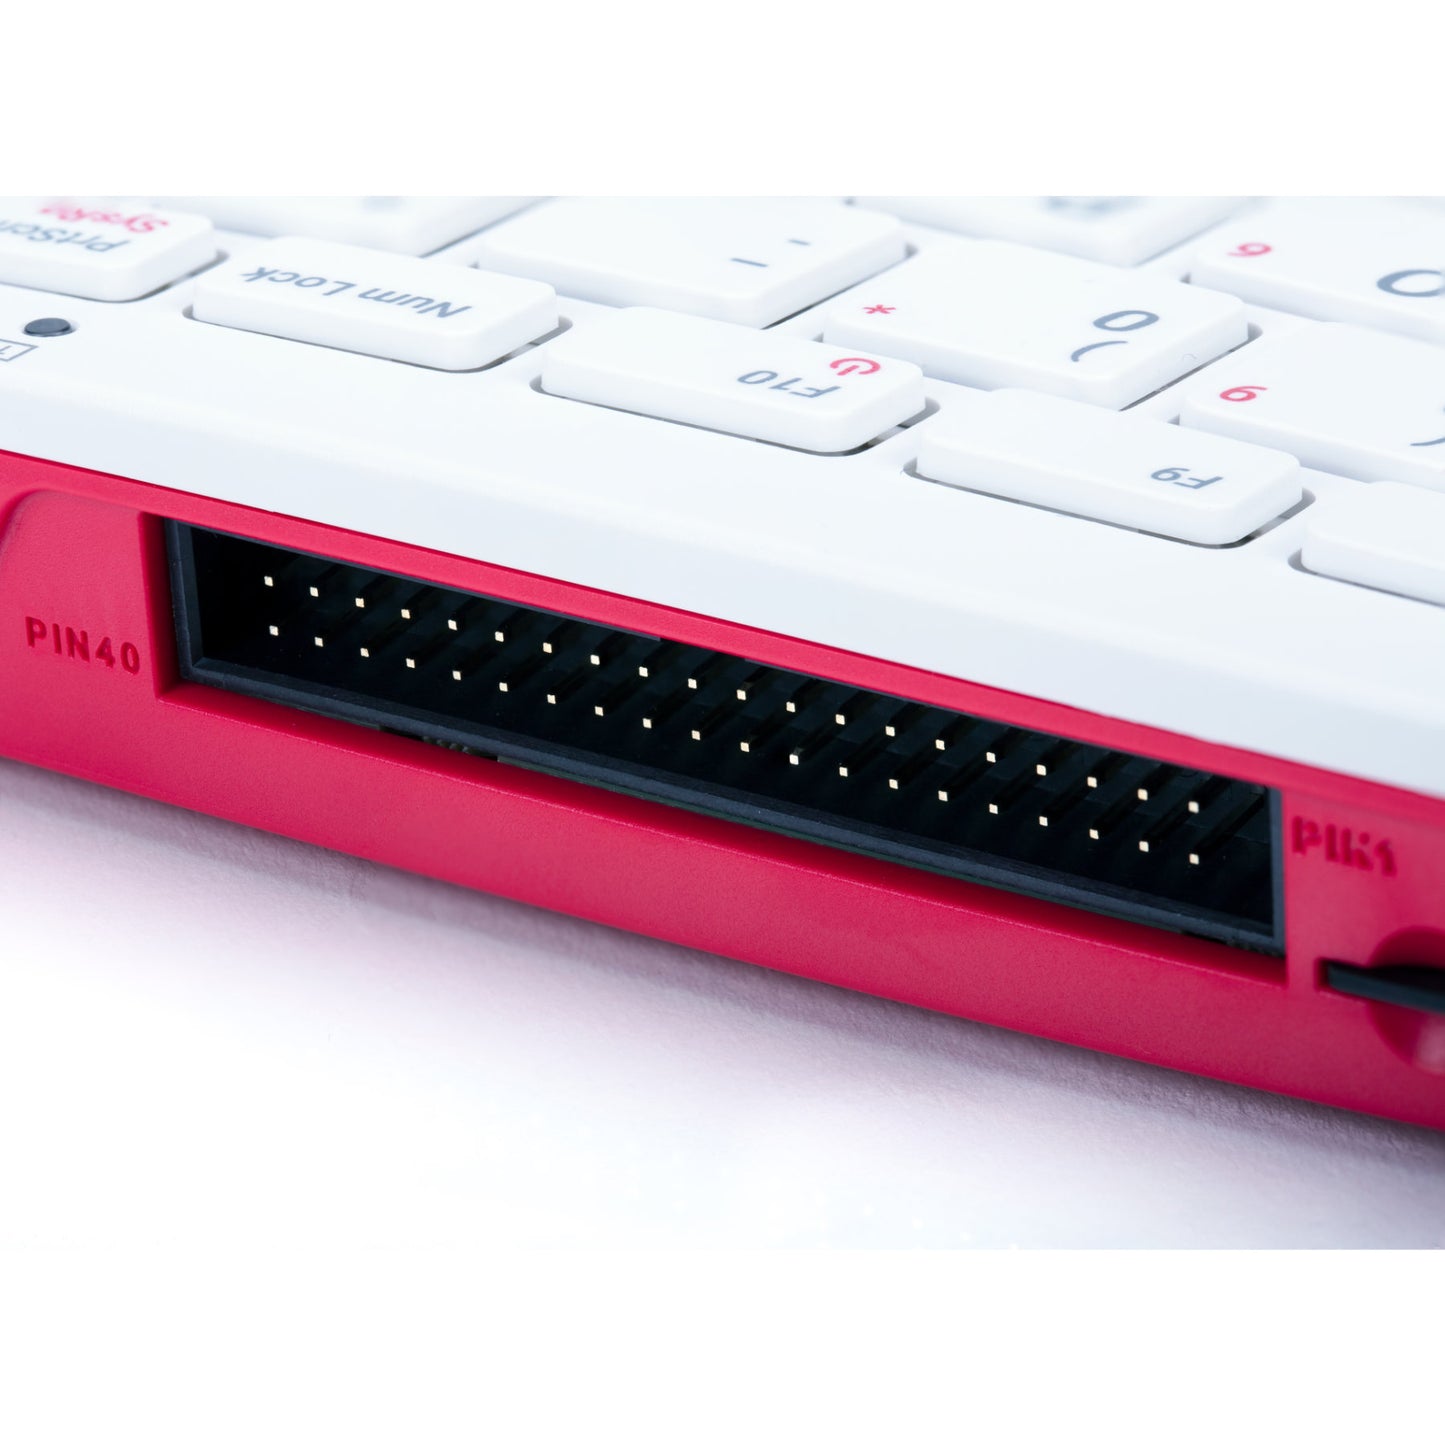 Raspberry Pi 400 Keyboard only